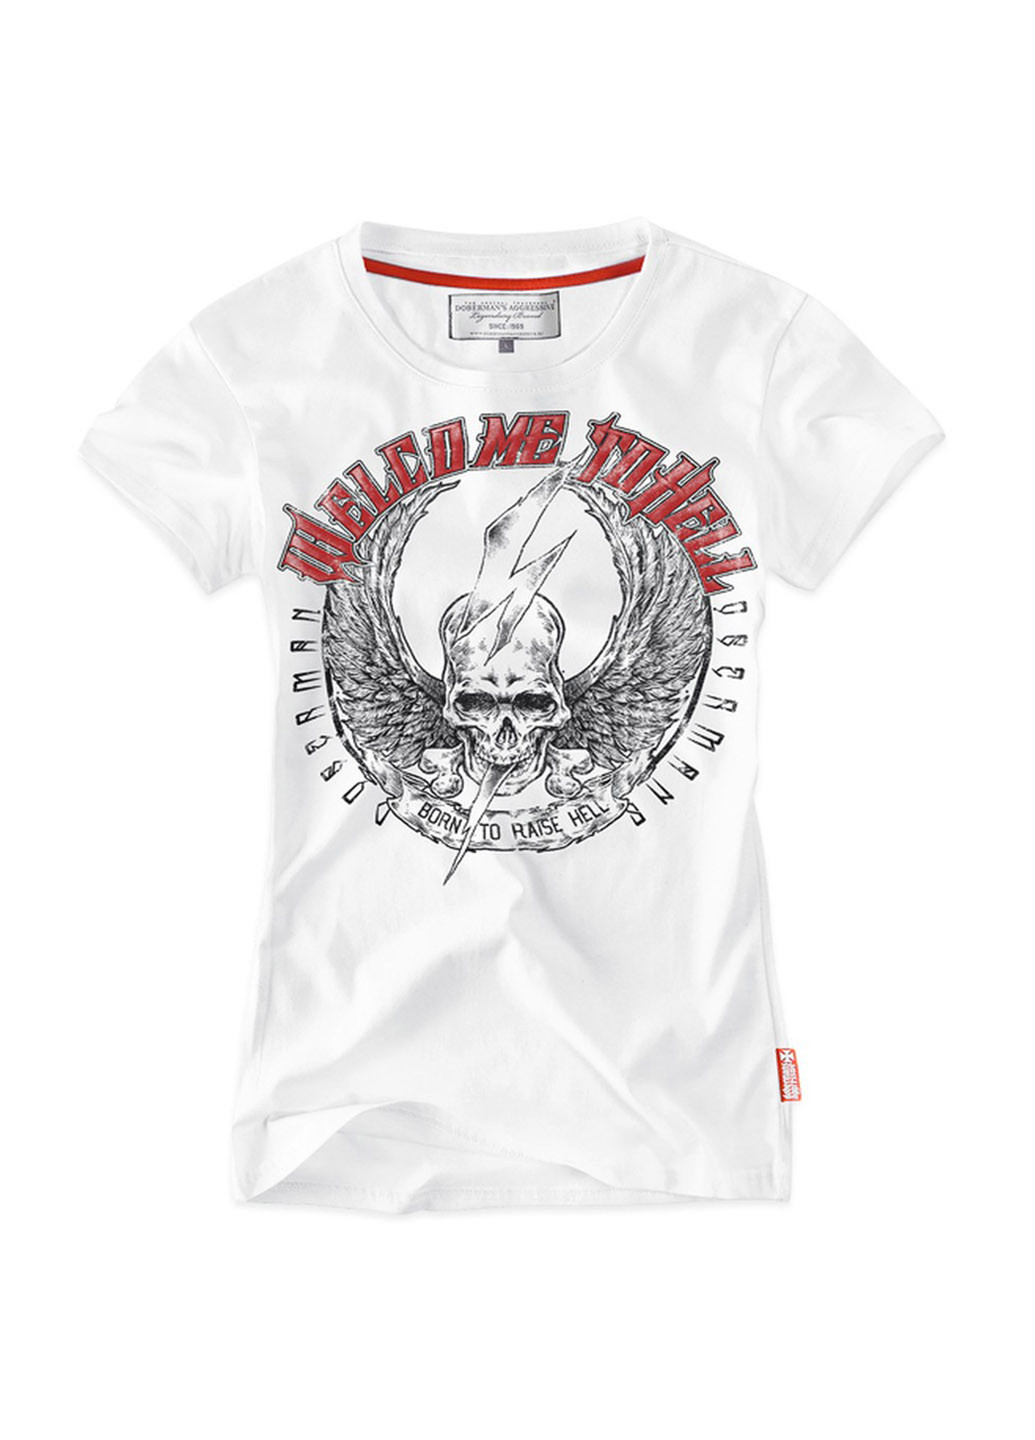 Белая летняя футболка dobermans welcome to hell tsd155wt Dobermans Aggressive